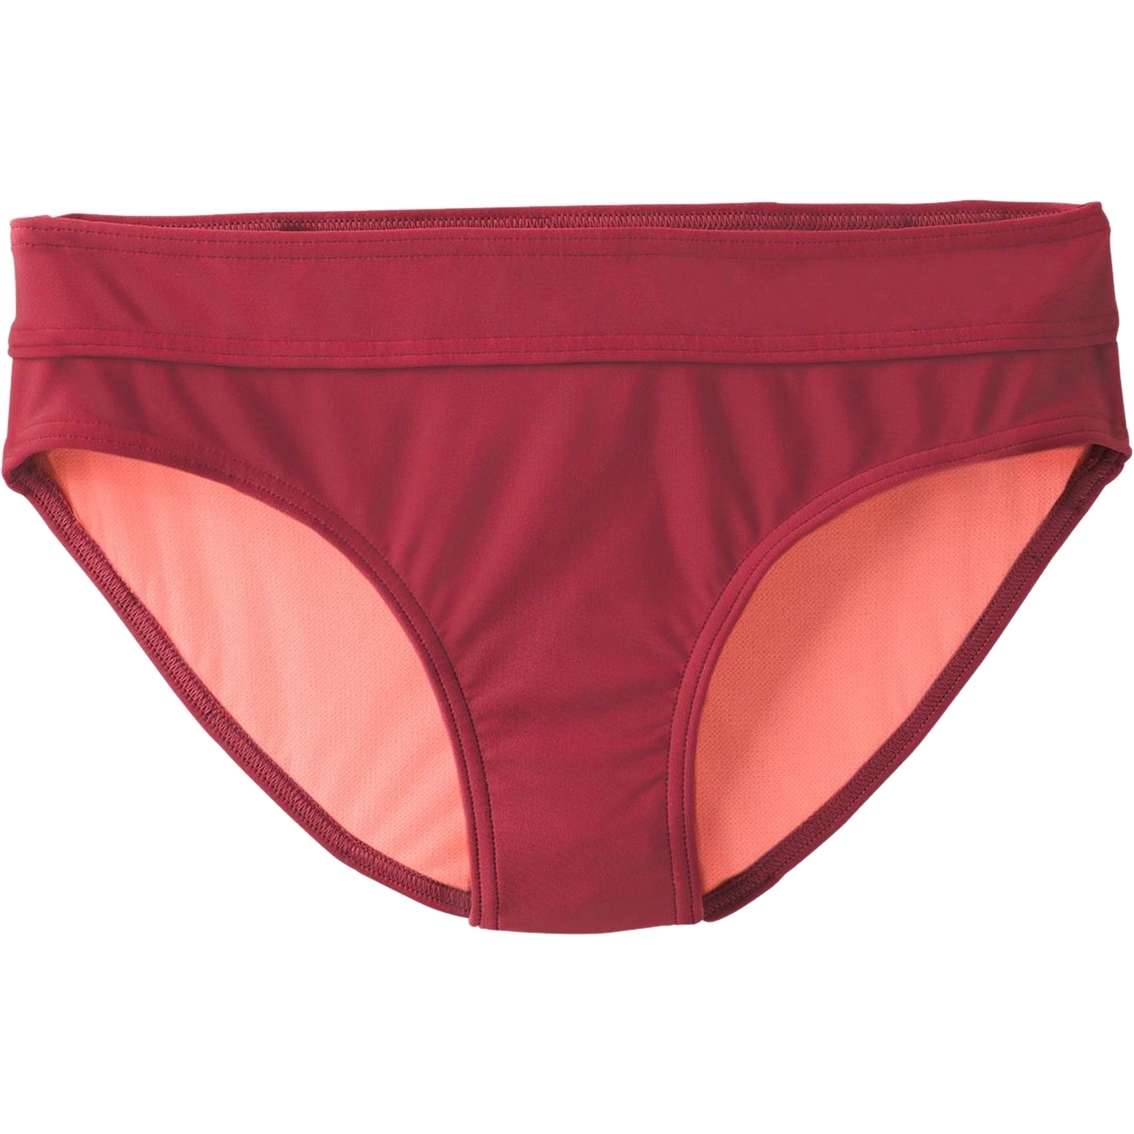 prAna Ramba Swimsuit Bottom - Image 3 of 3